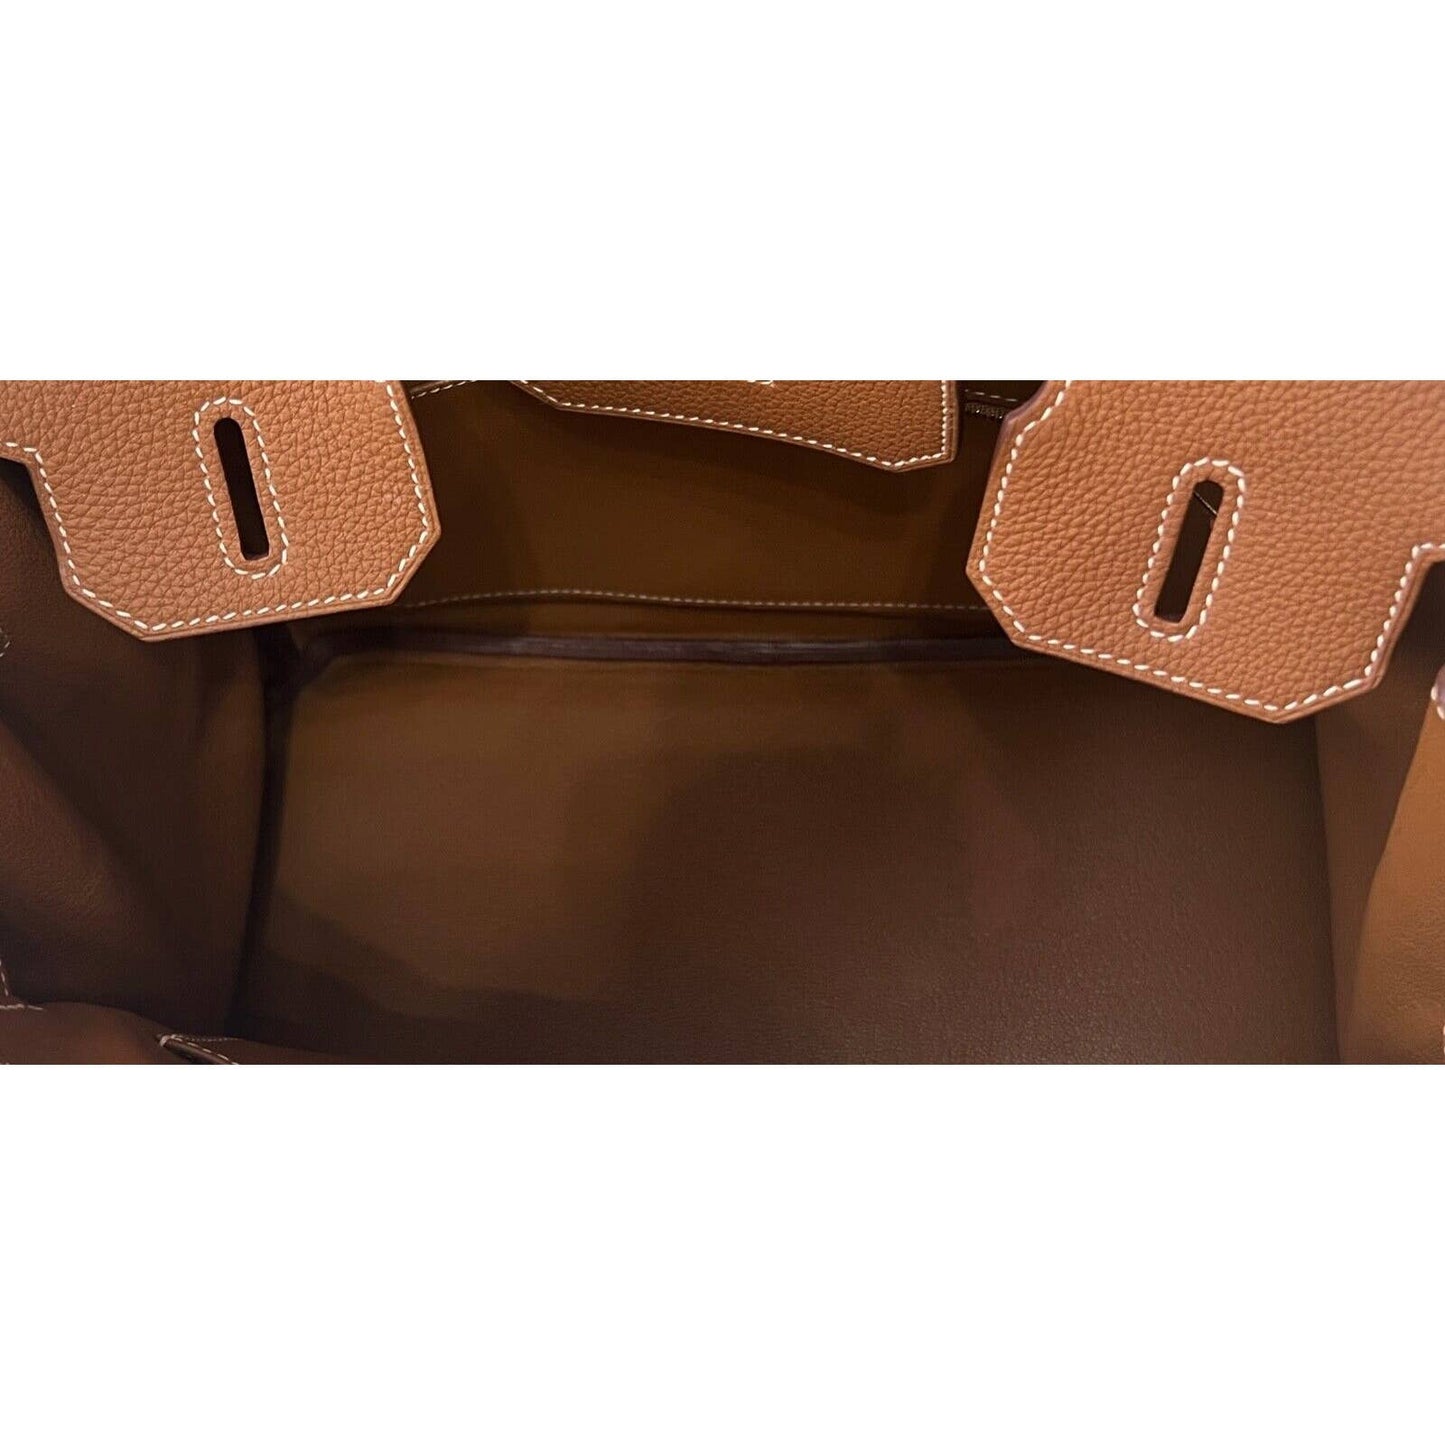 Hermès Birkin 30 Gold Tan Camel Togo Leather Gold Hardware Handbag Bag